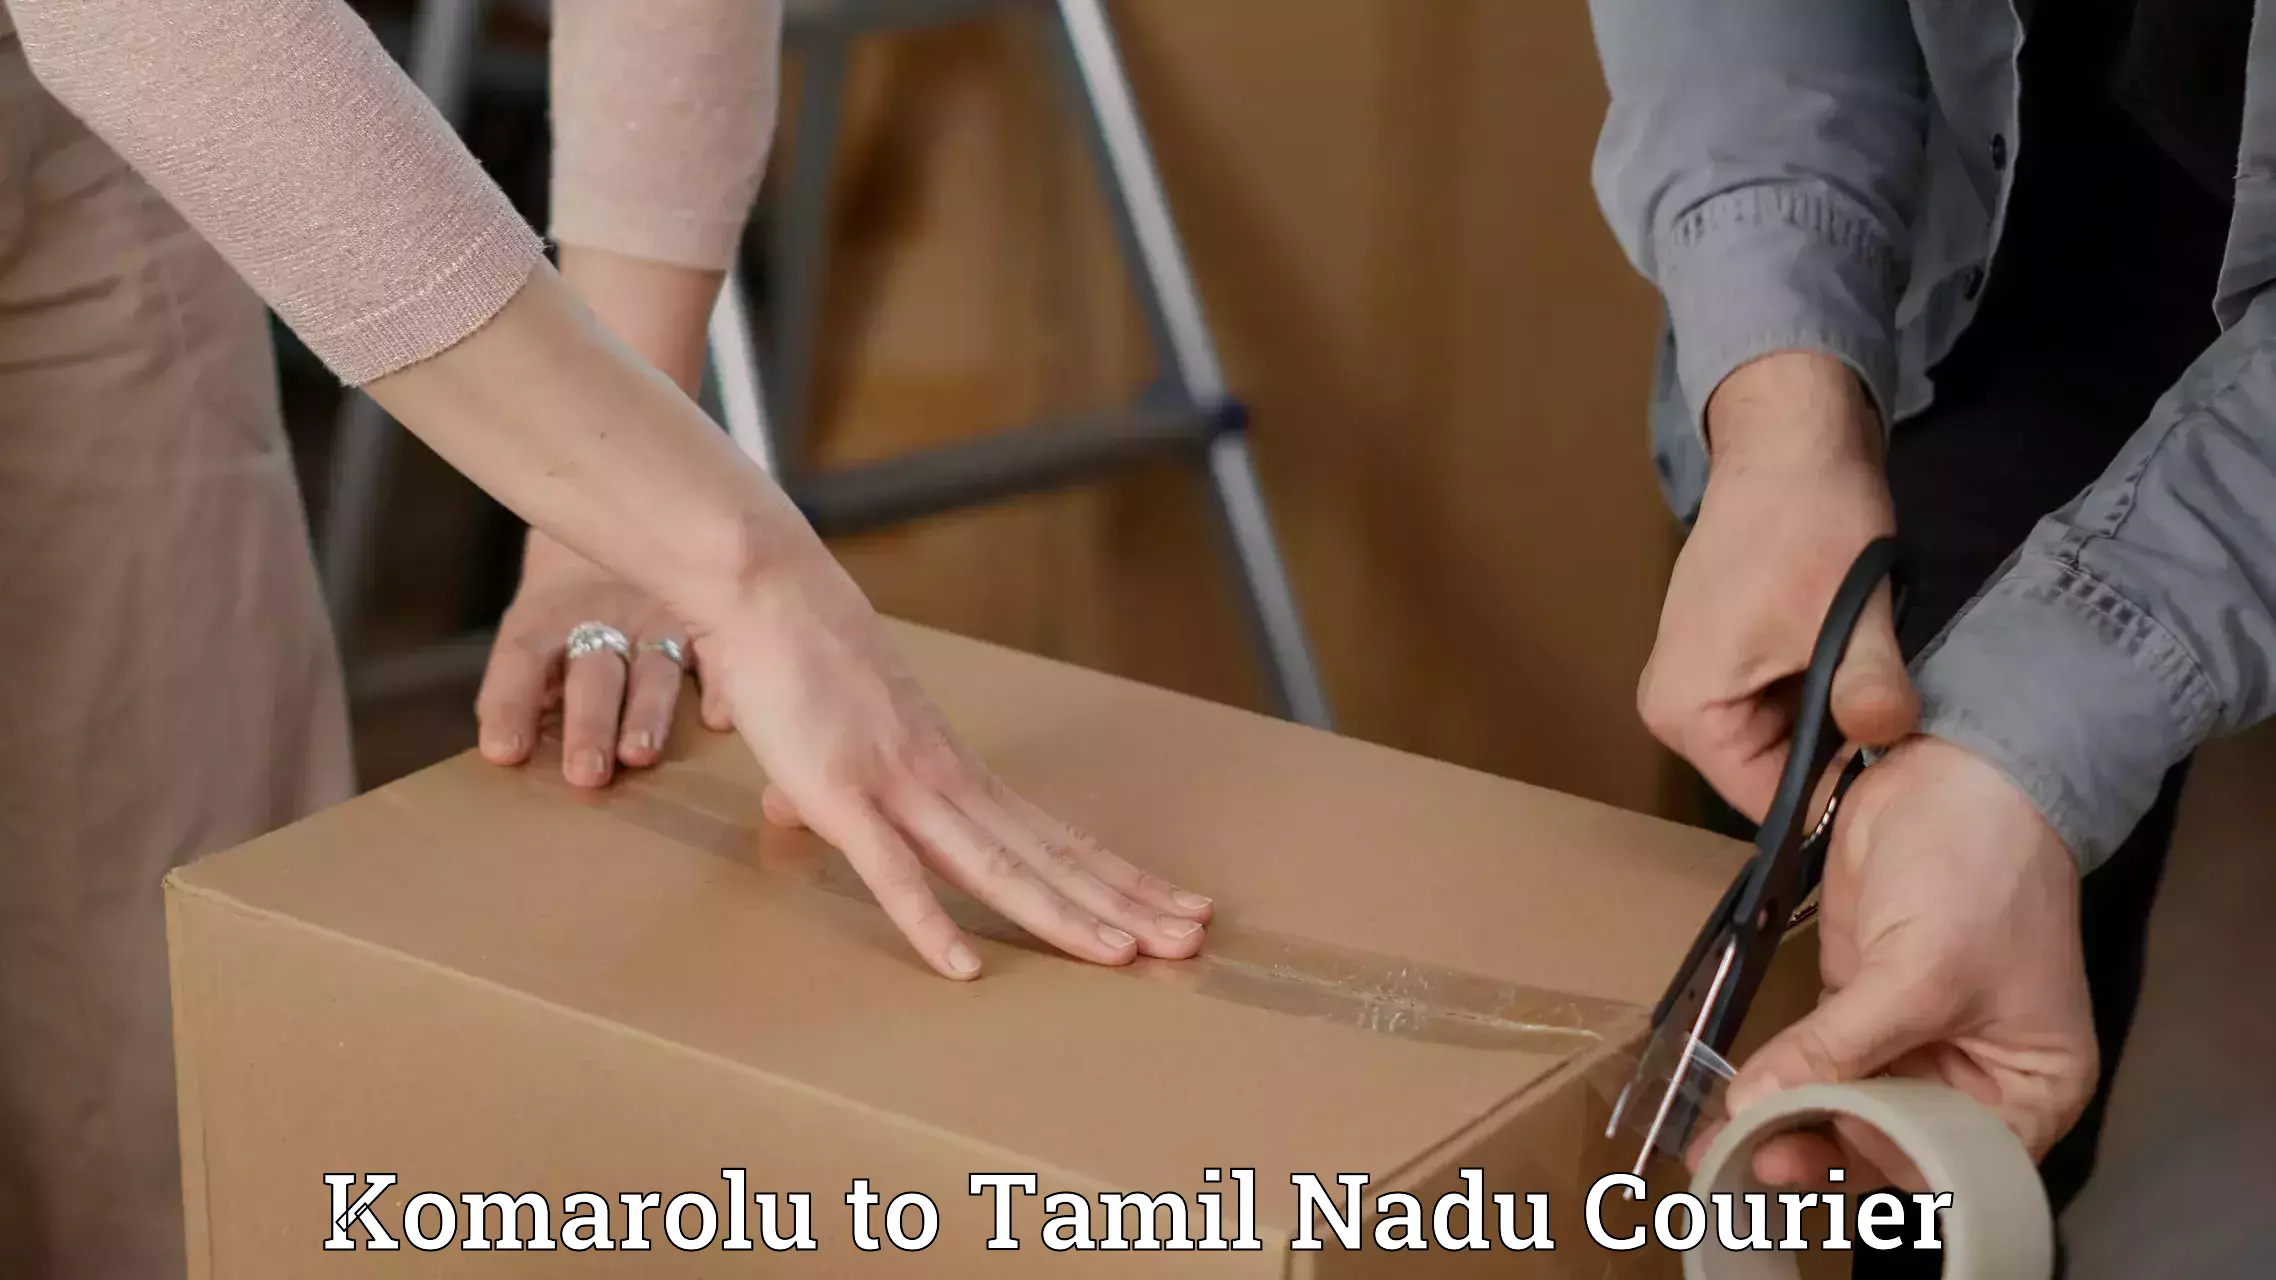 Courier service partnerships Komarolu to Tamil Nadu